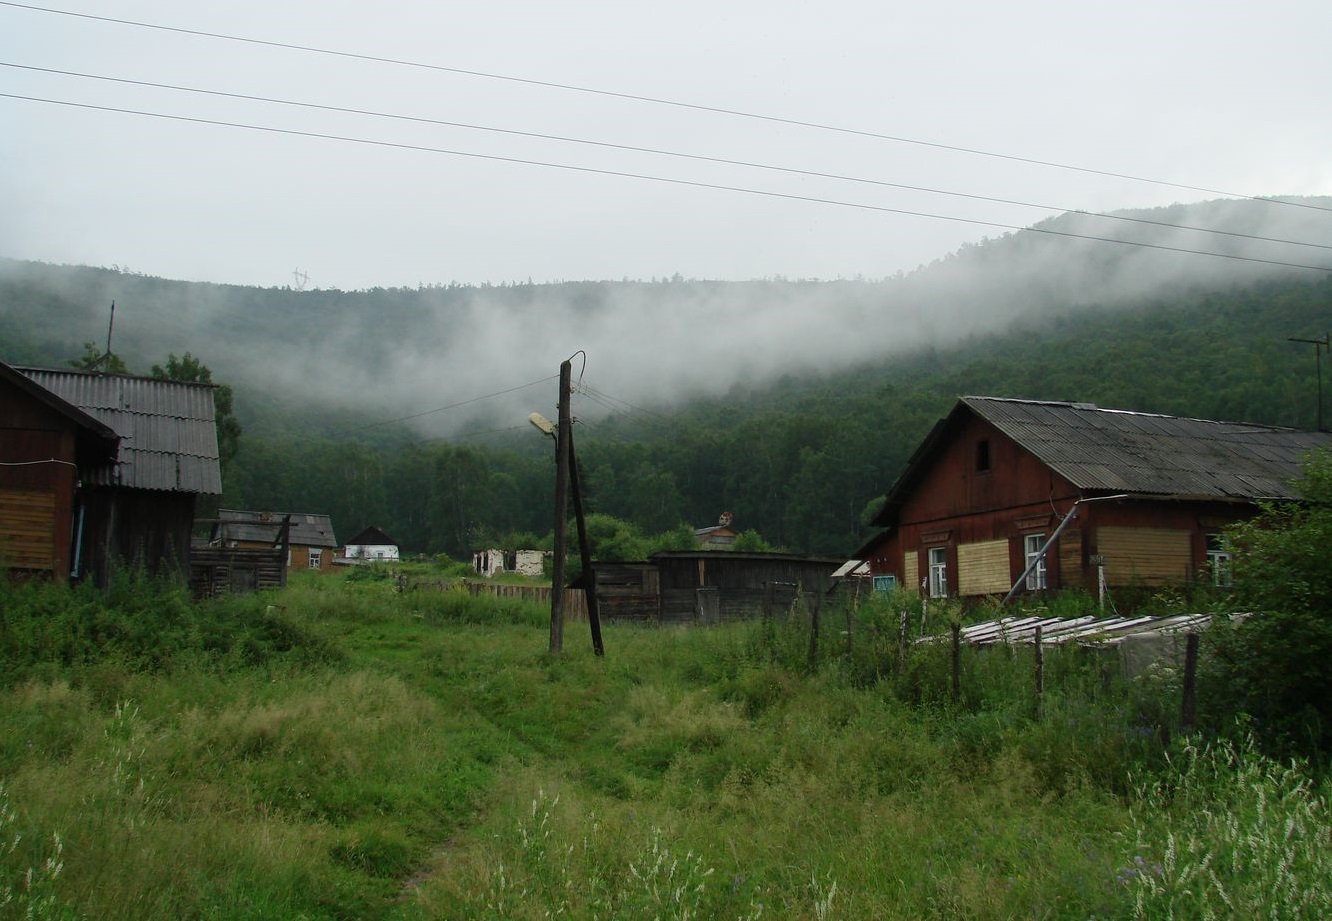 Култук, image of landscape/habitat.